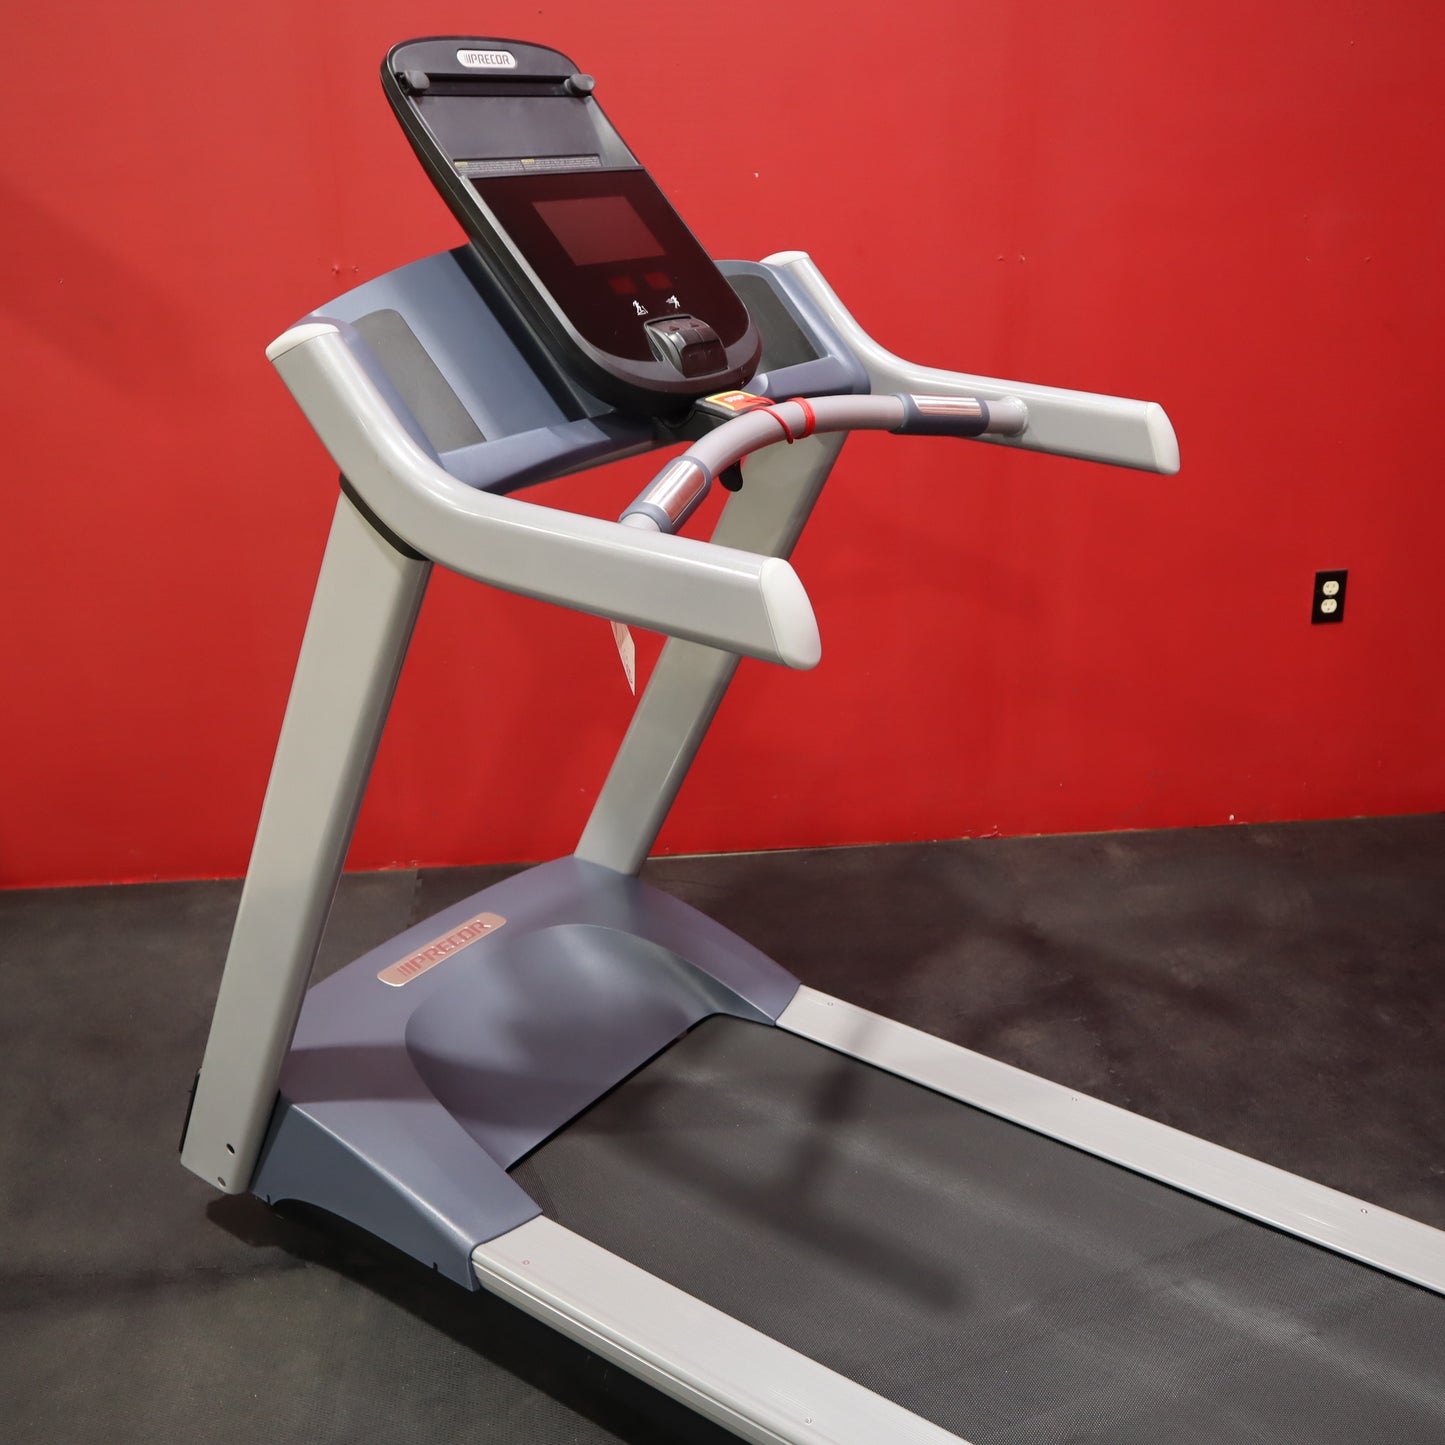 Precor TRM 243 Treadmill (Refurbished)